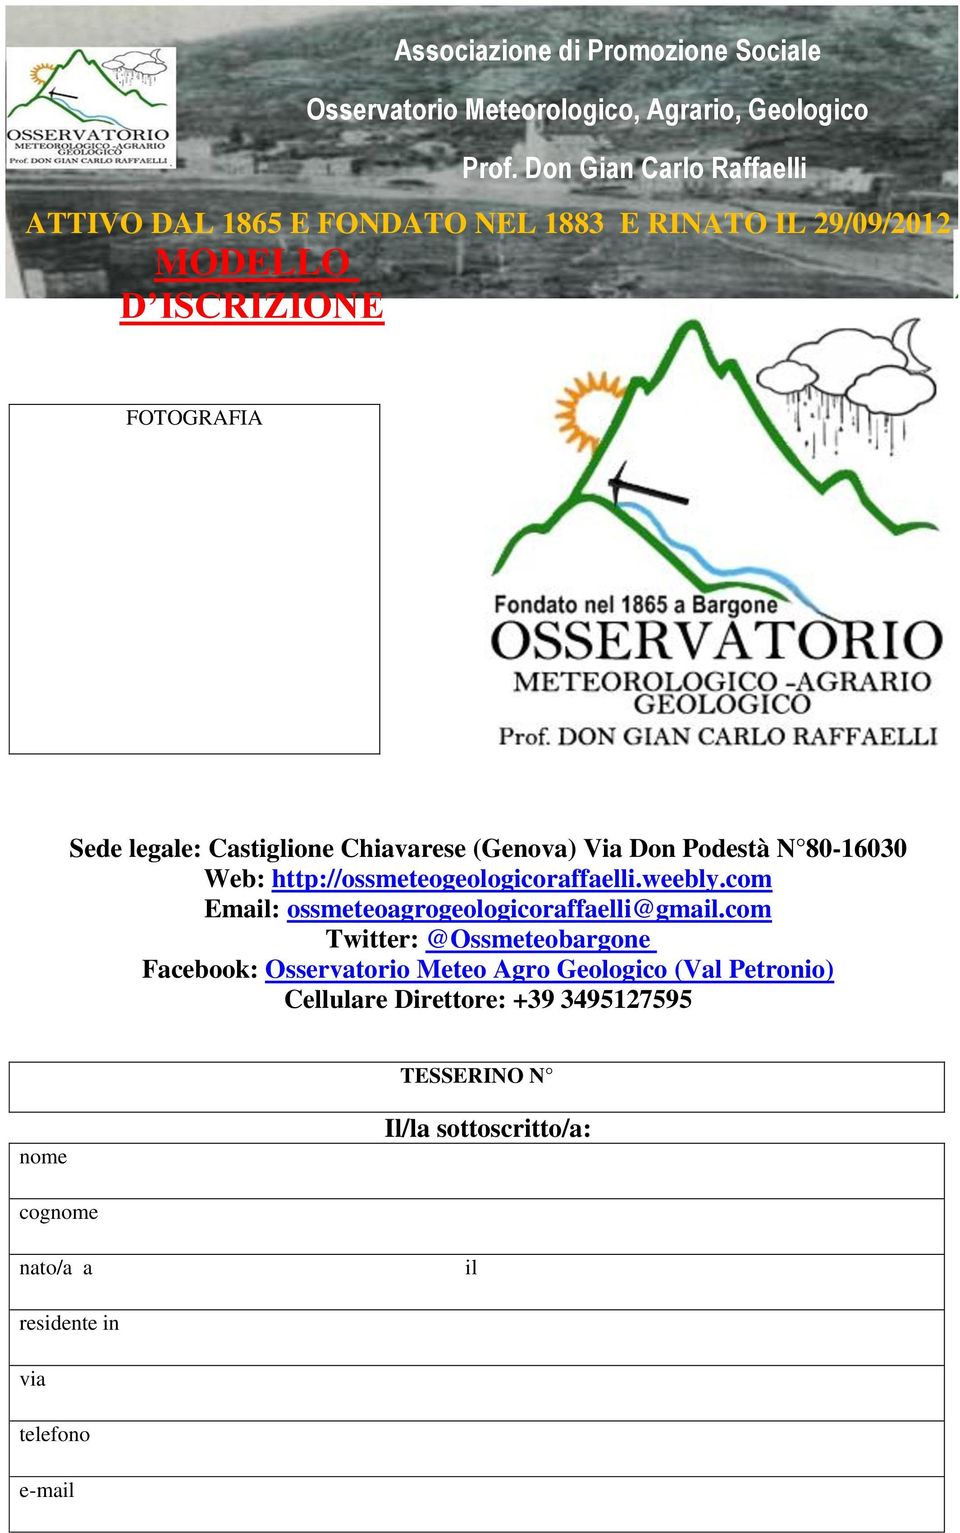 Chiavarese (Genova) Via Don Podestà N 80-16030 Web: http://ossmeteogeologicoraffaelli.weebly.com Email: ossmeteoagrogeologicoraffaelli@gmail.